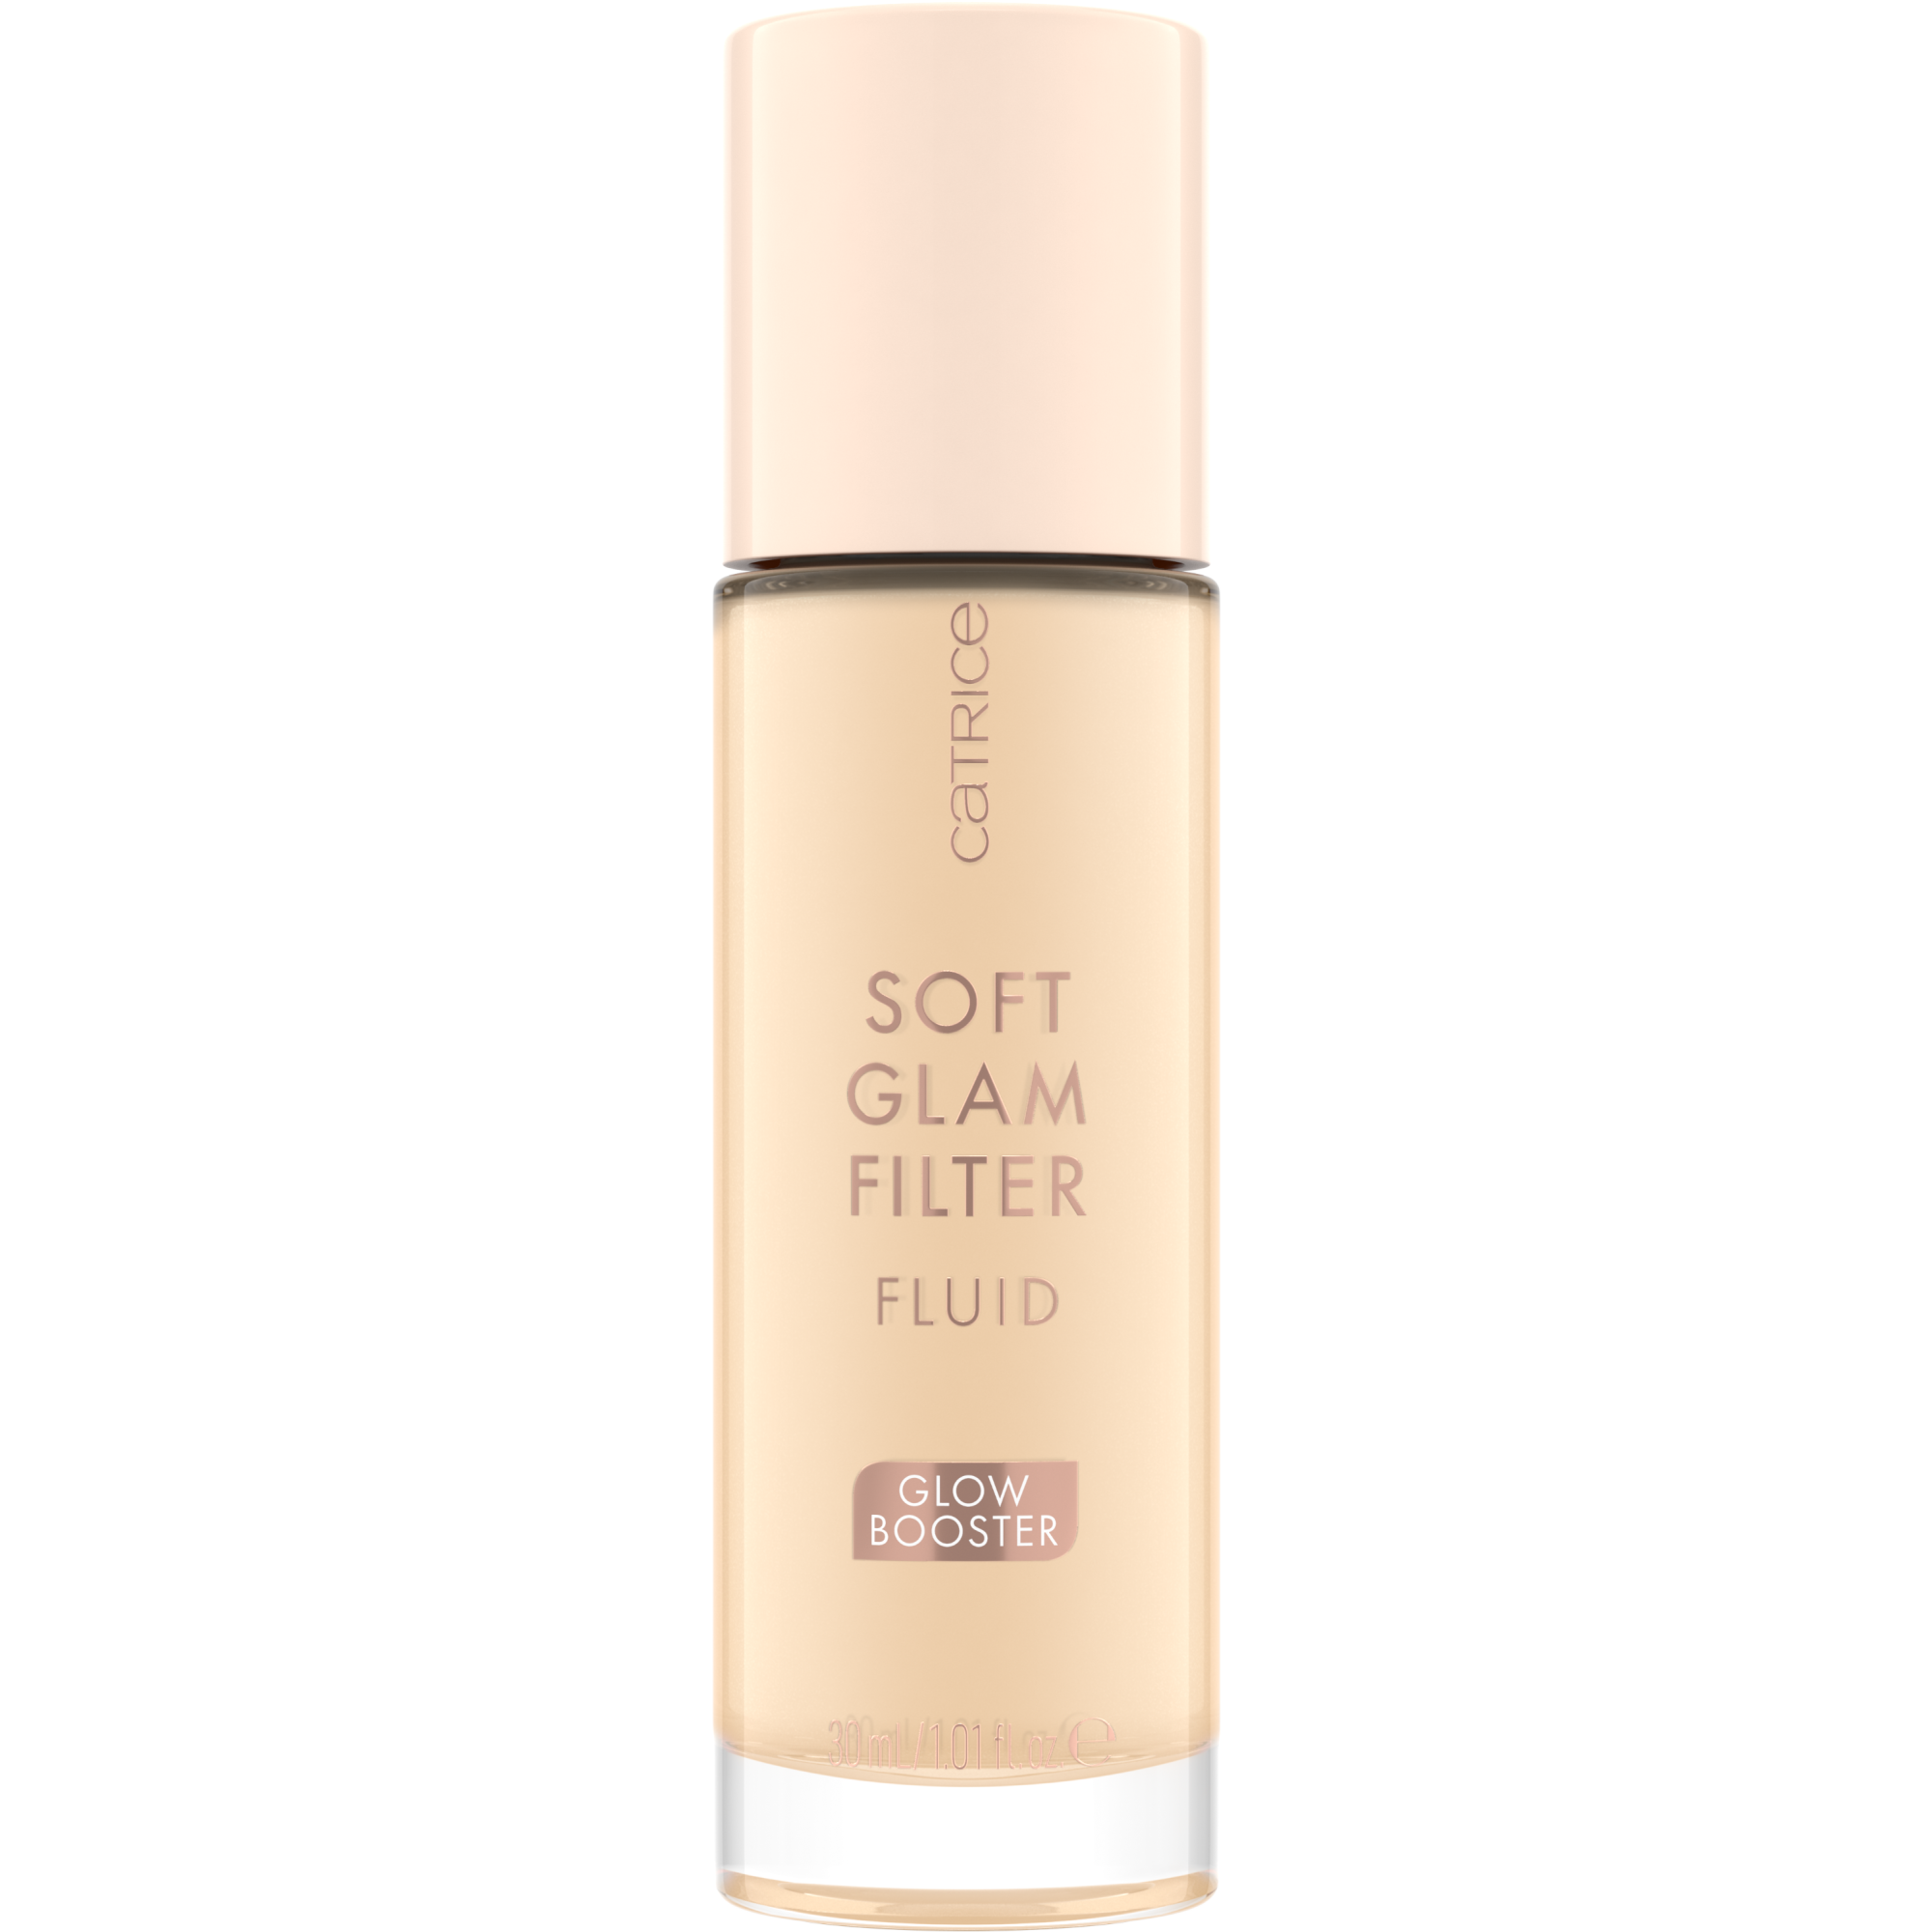 Soft Glam Filter Fluid